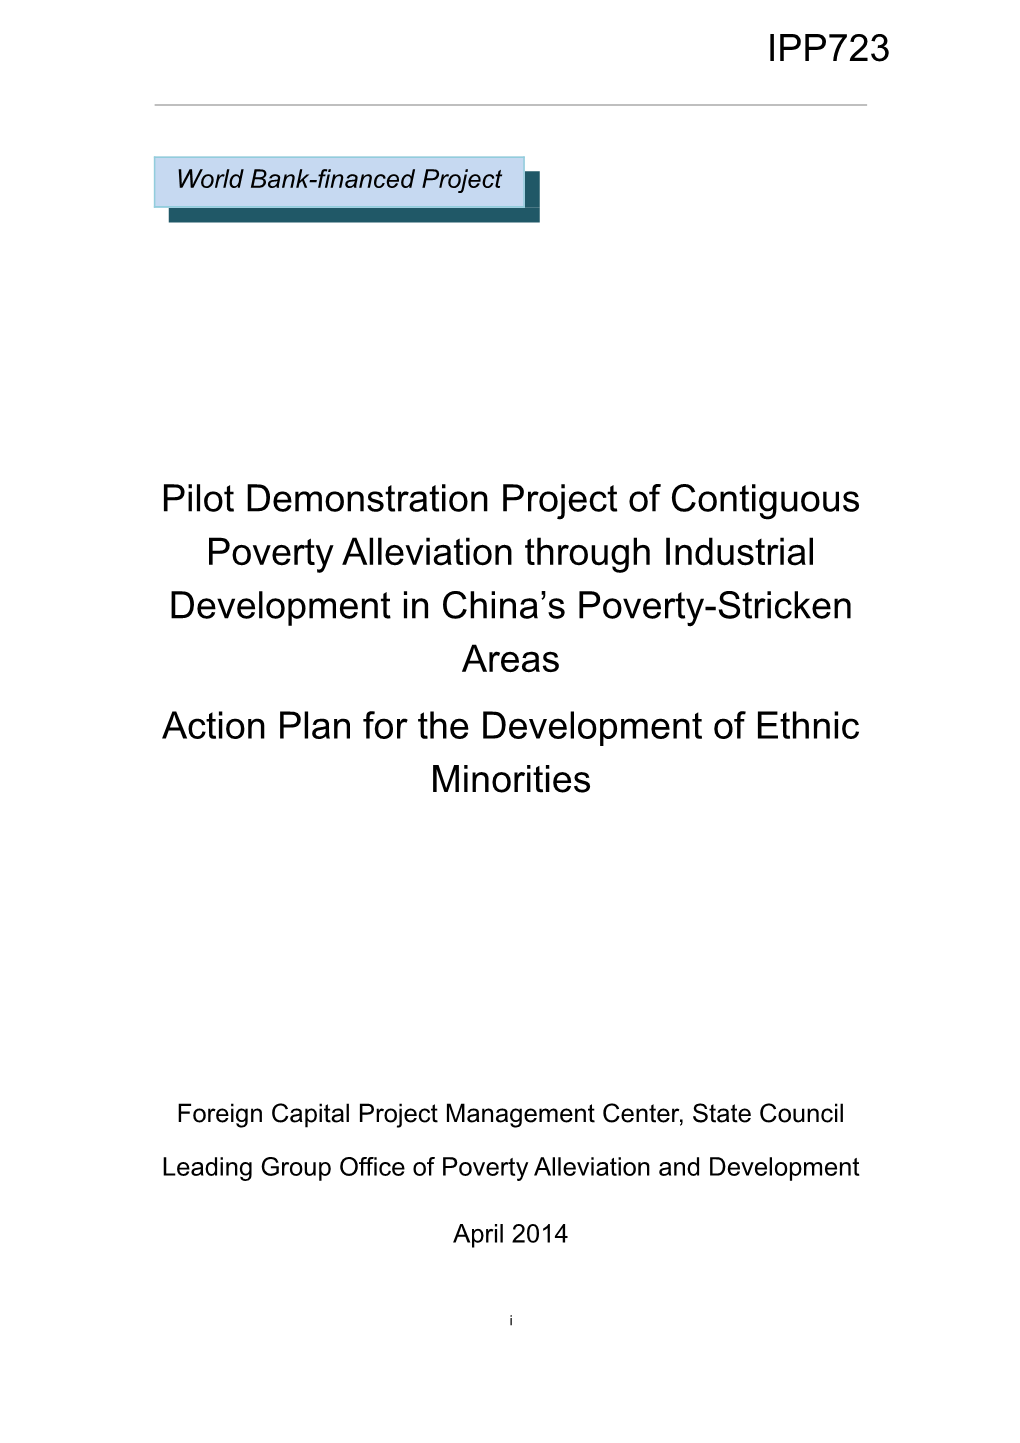 Action Plan for the Development of Ethnic Minorities